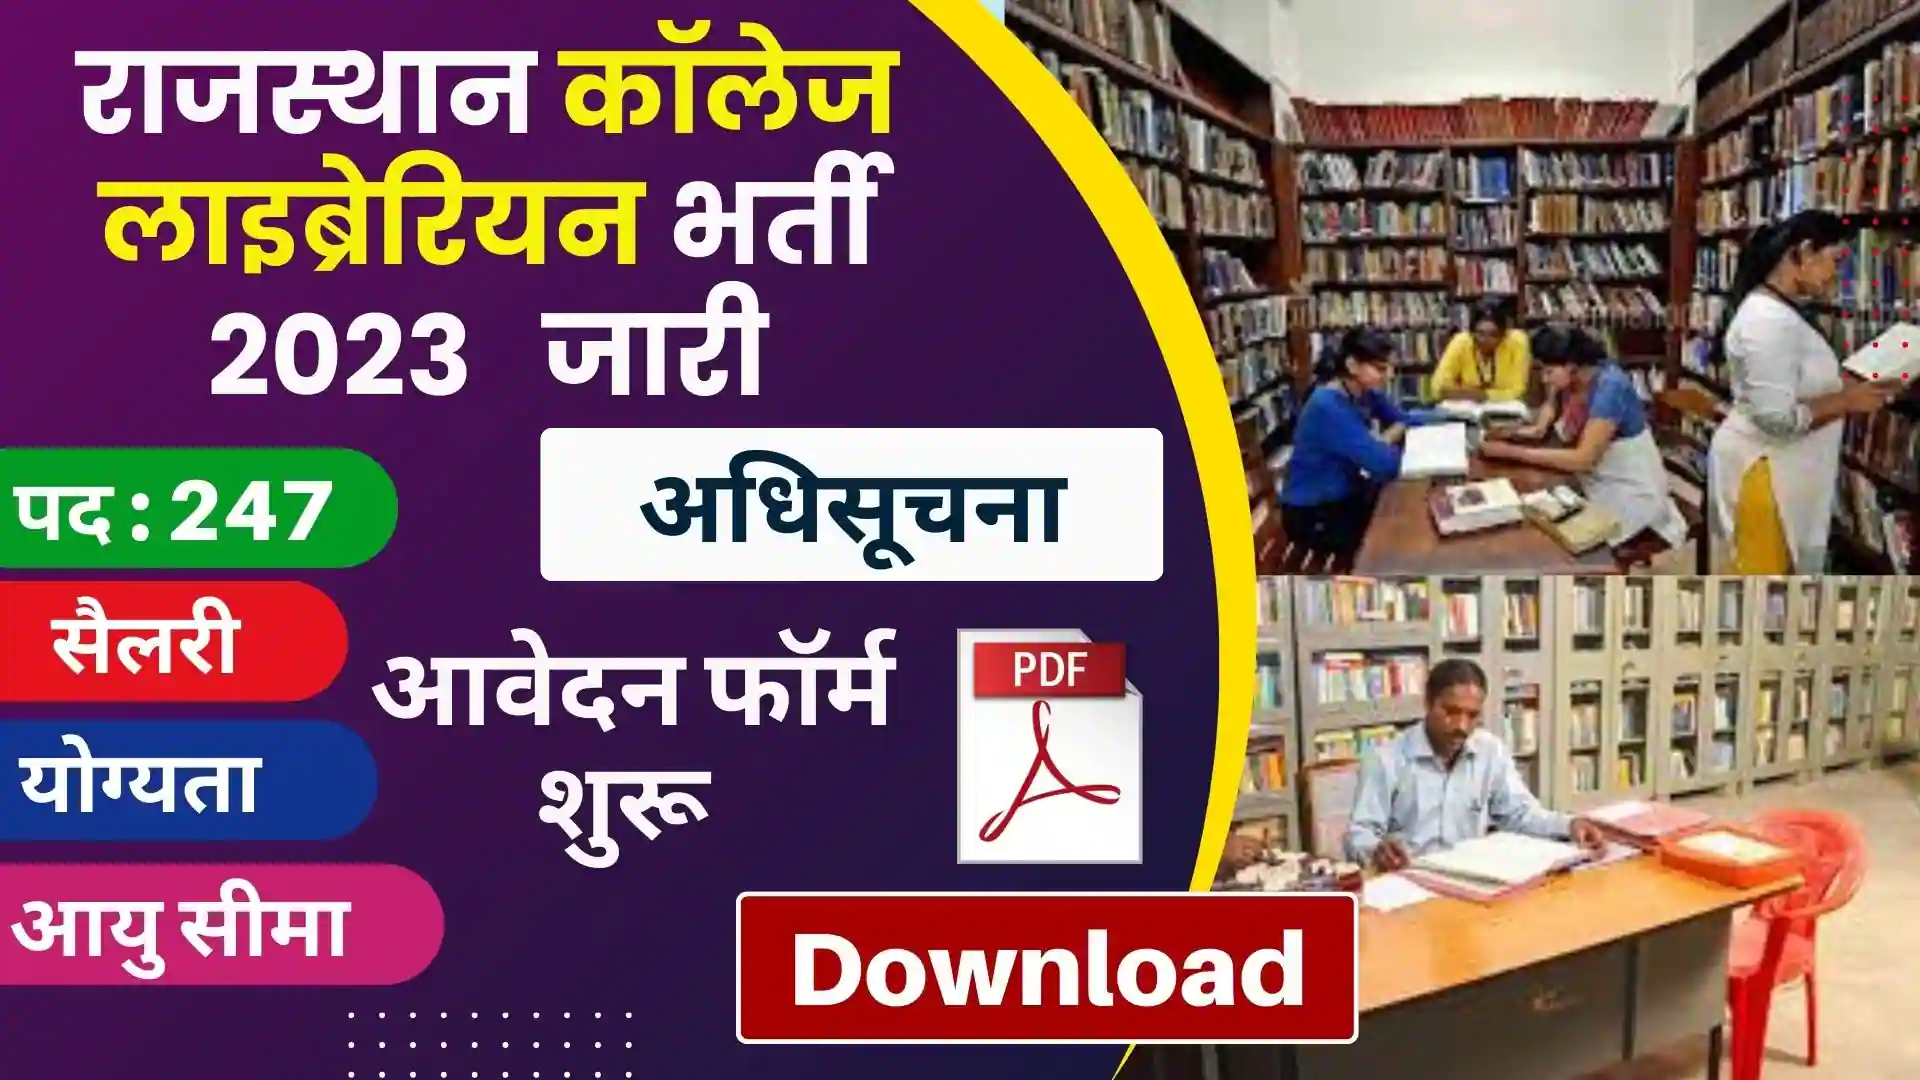 Rajasthan Librarian Vacancy 2023 Image WEBP